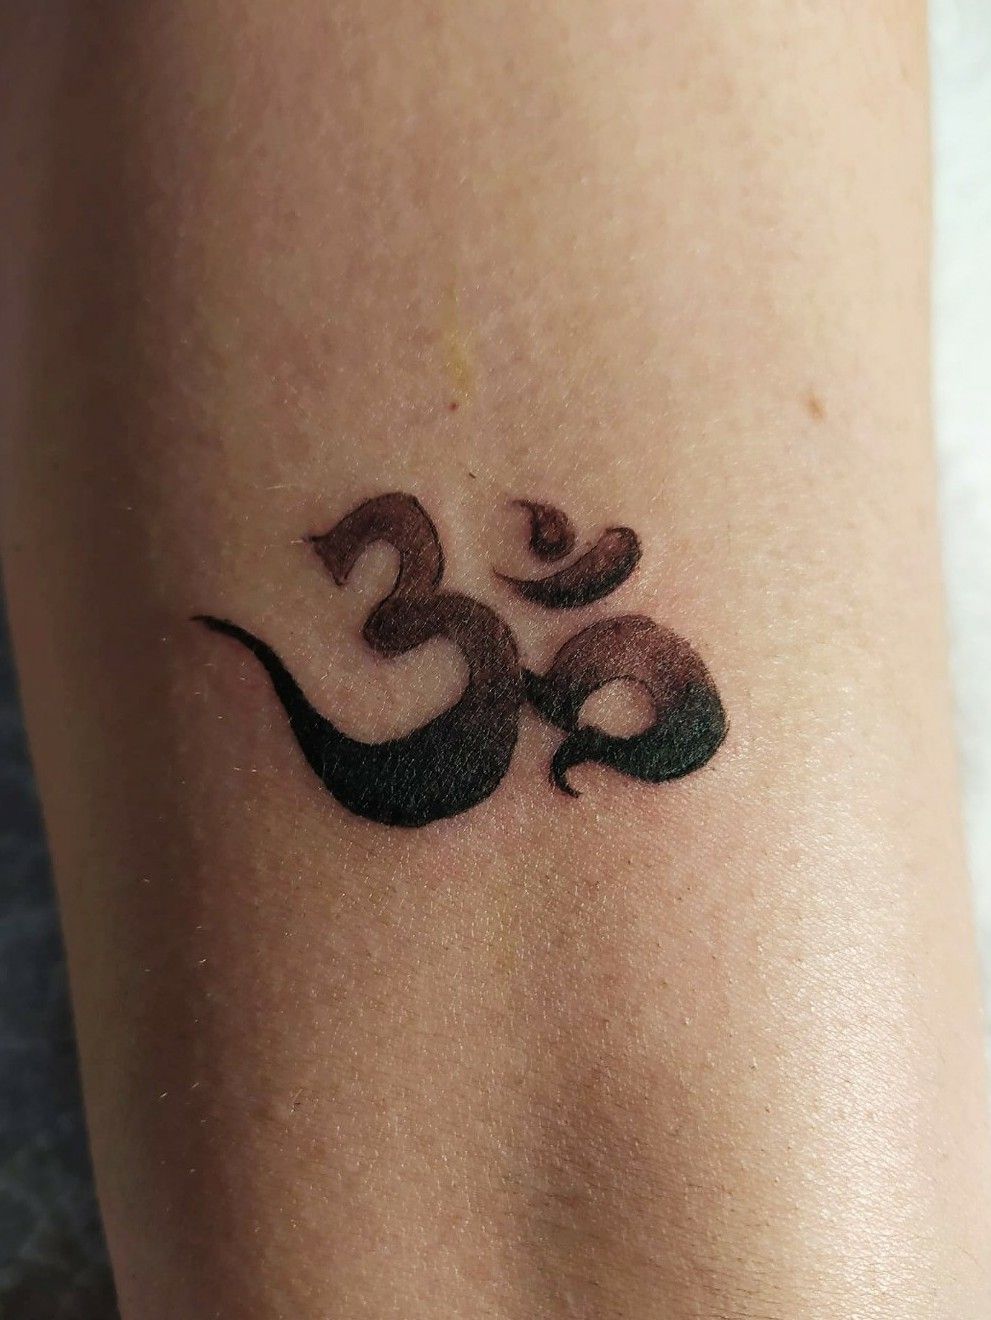 25 Amazing Sanskrit Tattoo Designs With Meanings  Body Art Guru